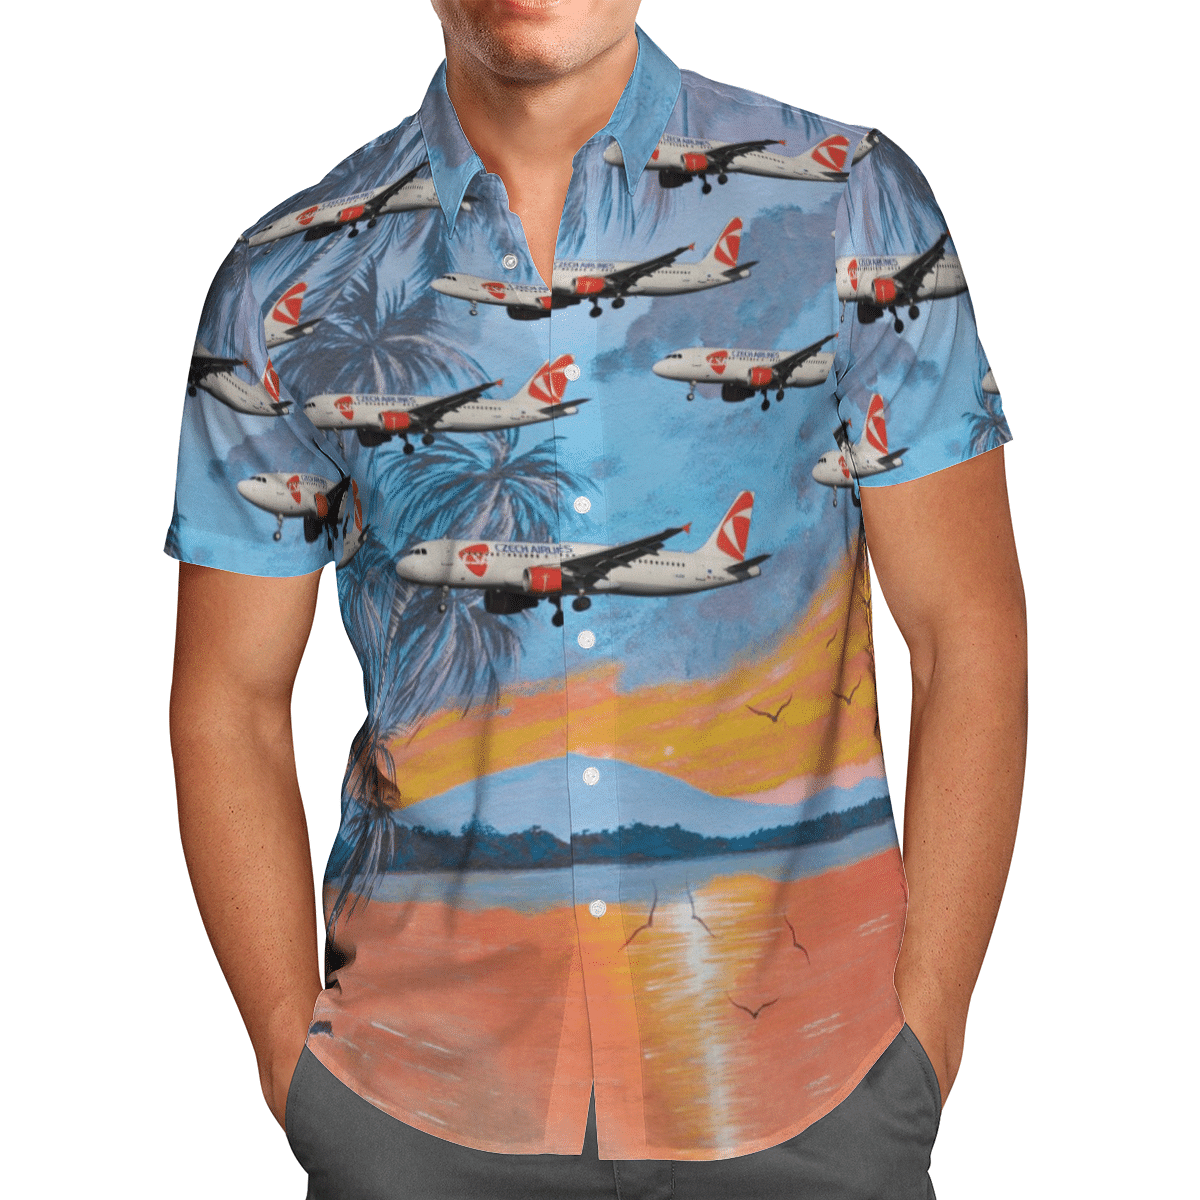 HOT Czech Airlines All Over Print Tropical Shirt1